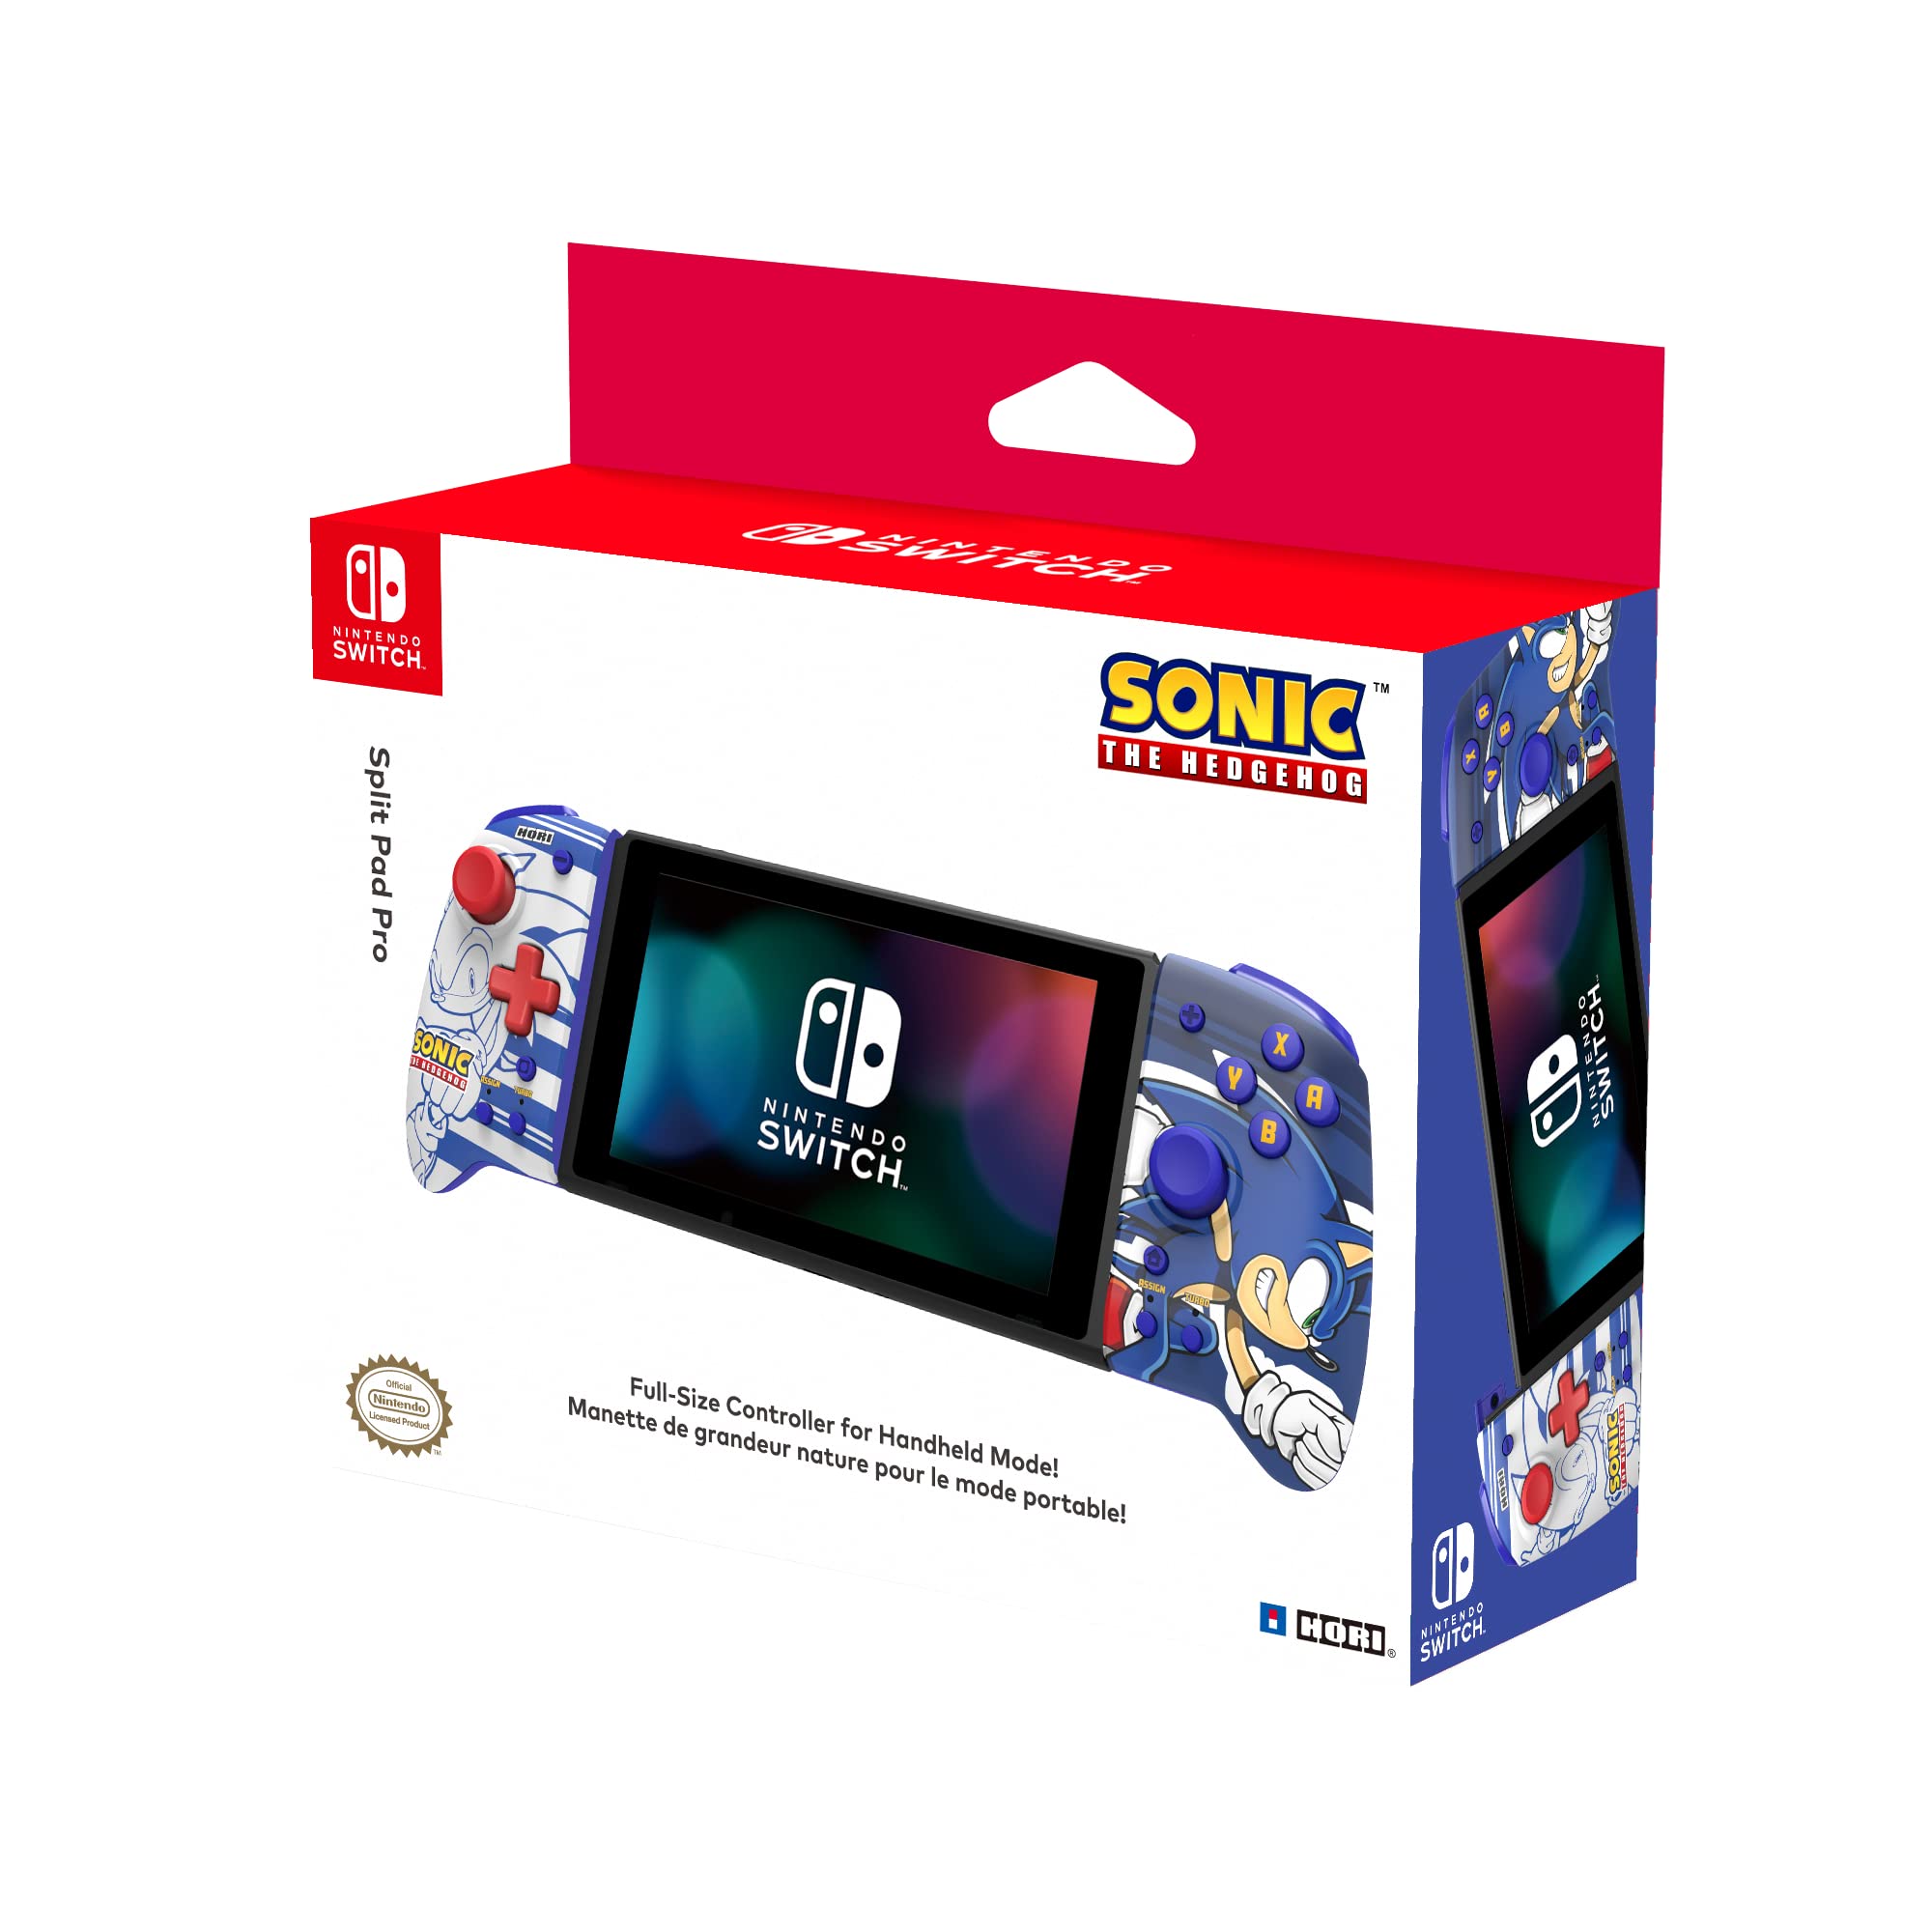 HORI Split Pad Pro (Sonic) Ergonomic Controller for Handheld Mode - Officially Licensed By Nintendo & Sega - Nintendo Switch;